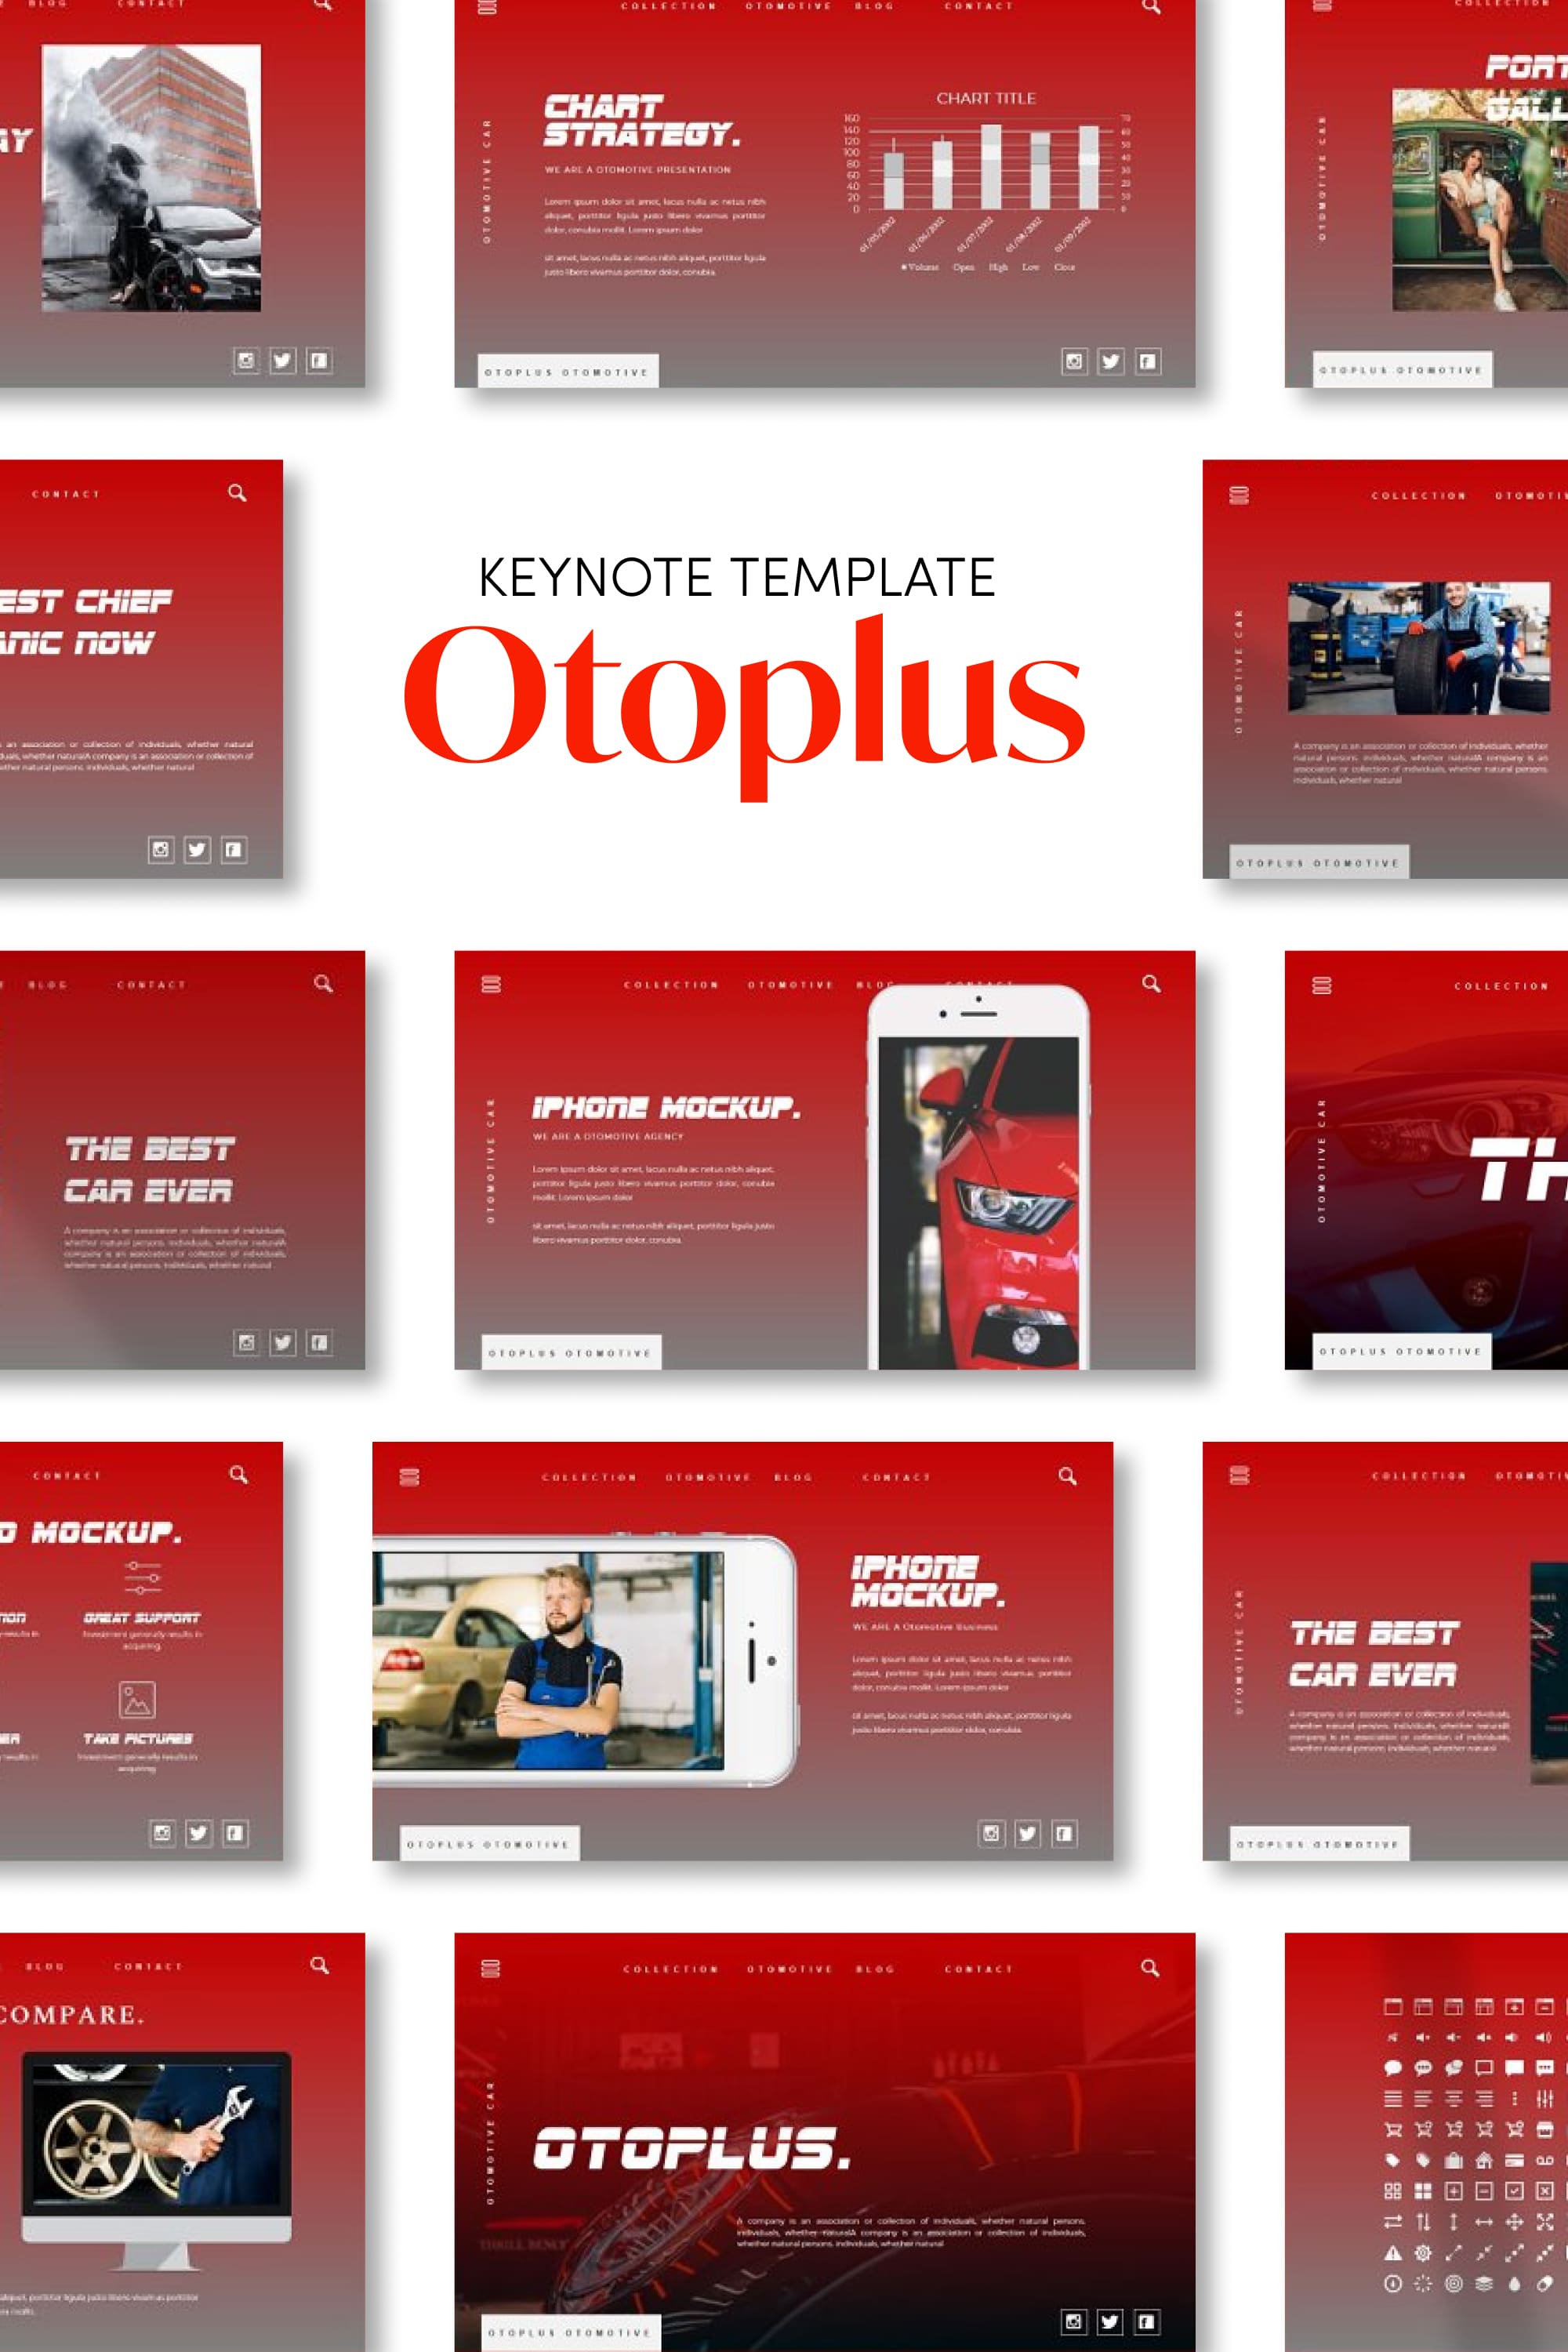 Otoplus keynote template - pinterest image preview.